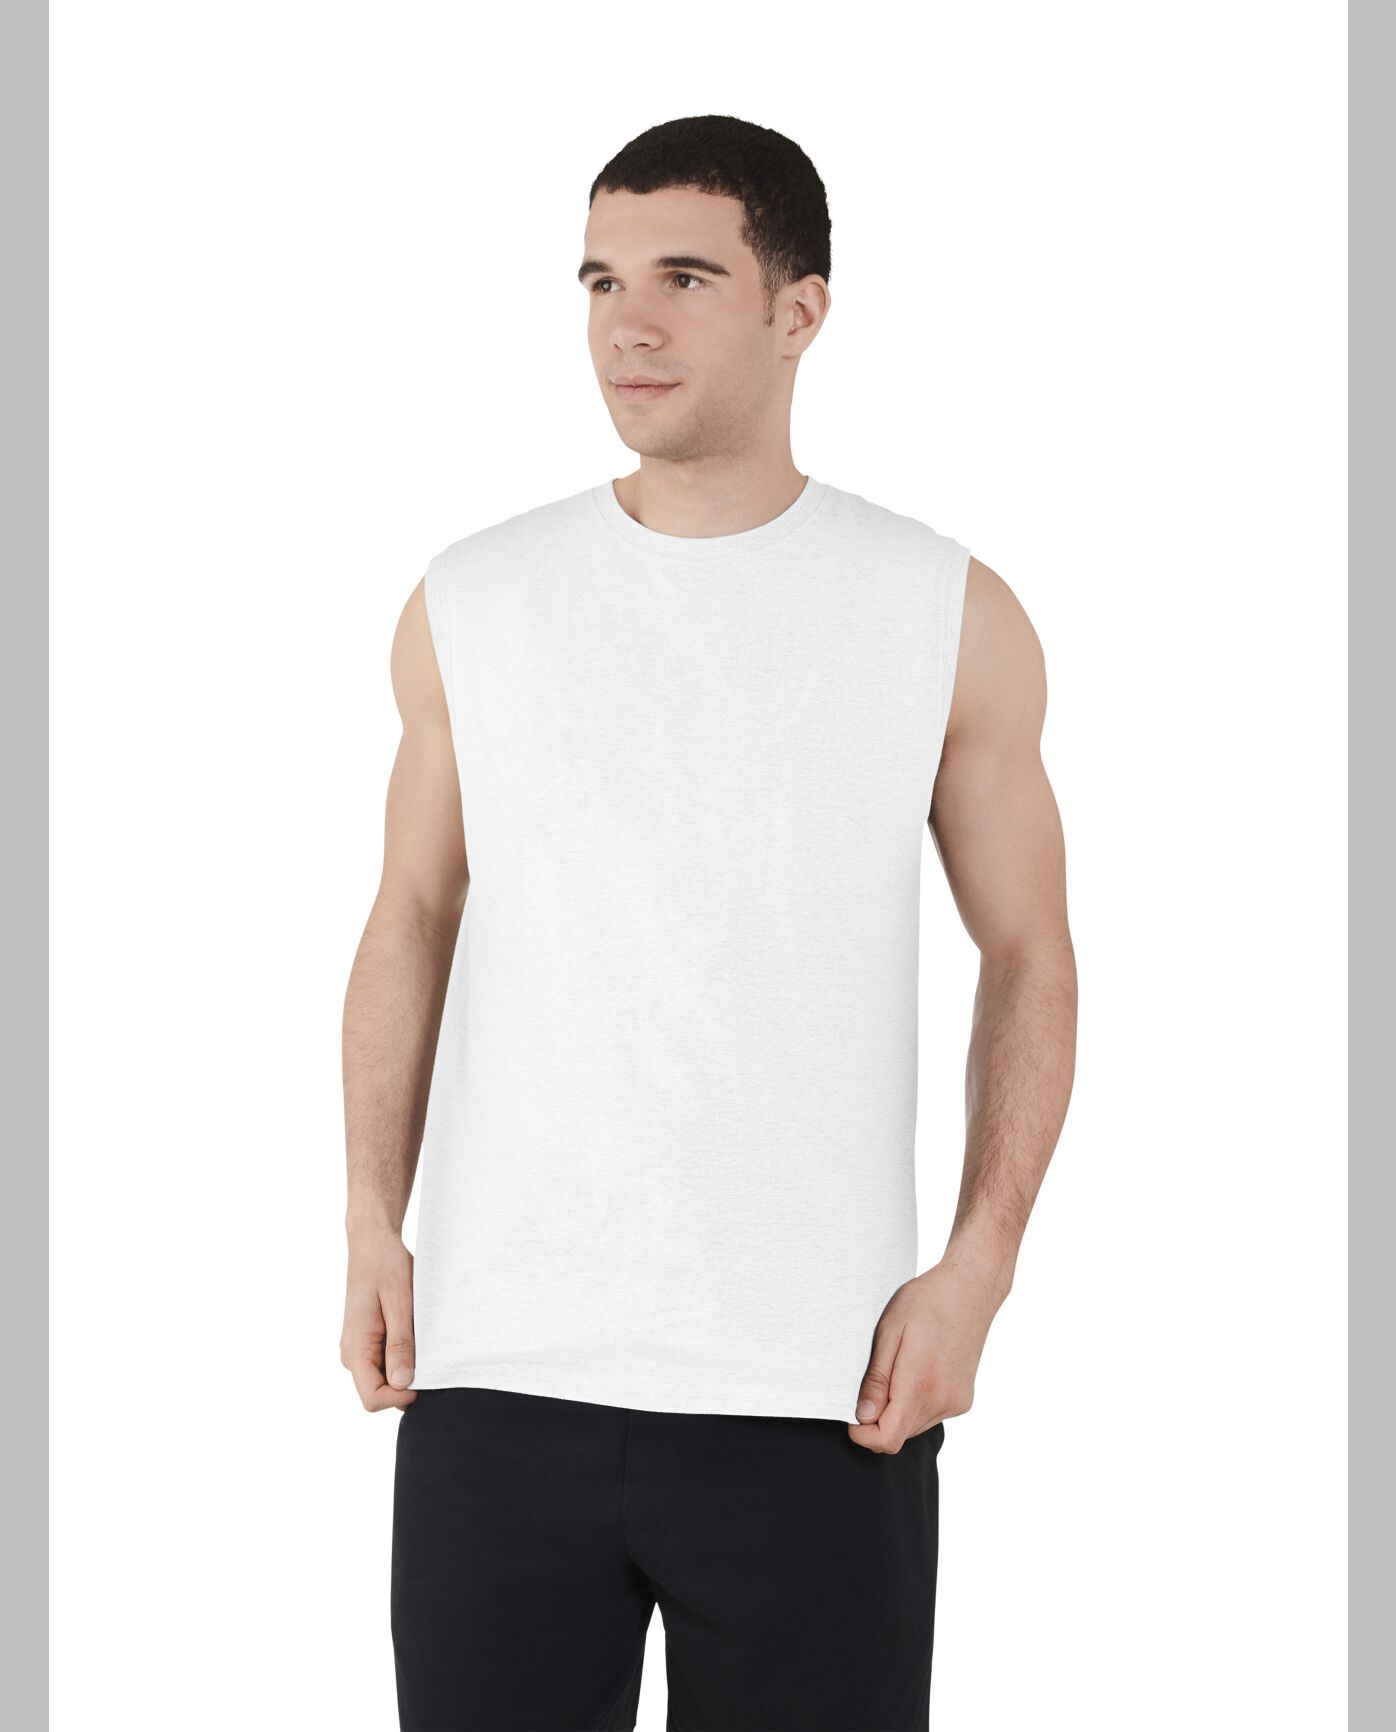 Men's Dual Defense UPF Muscle Shirt